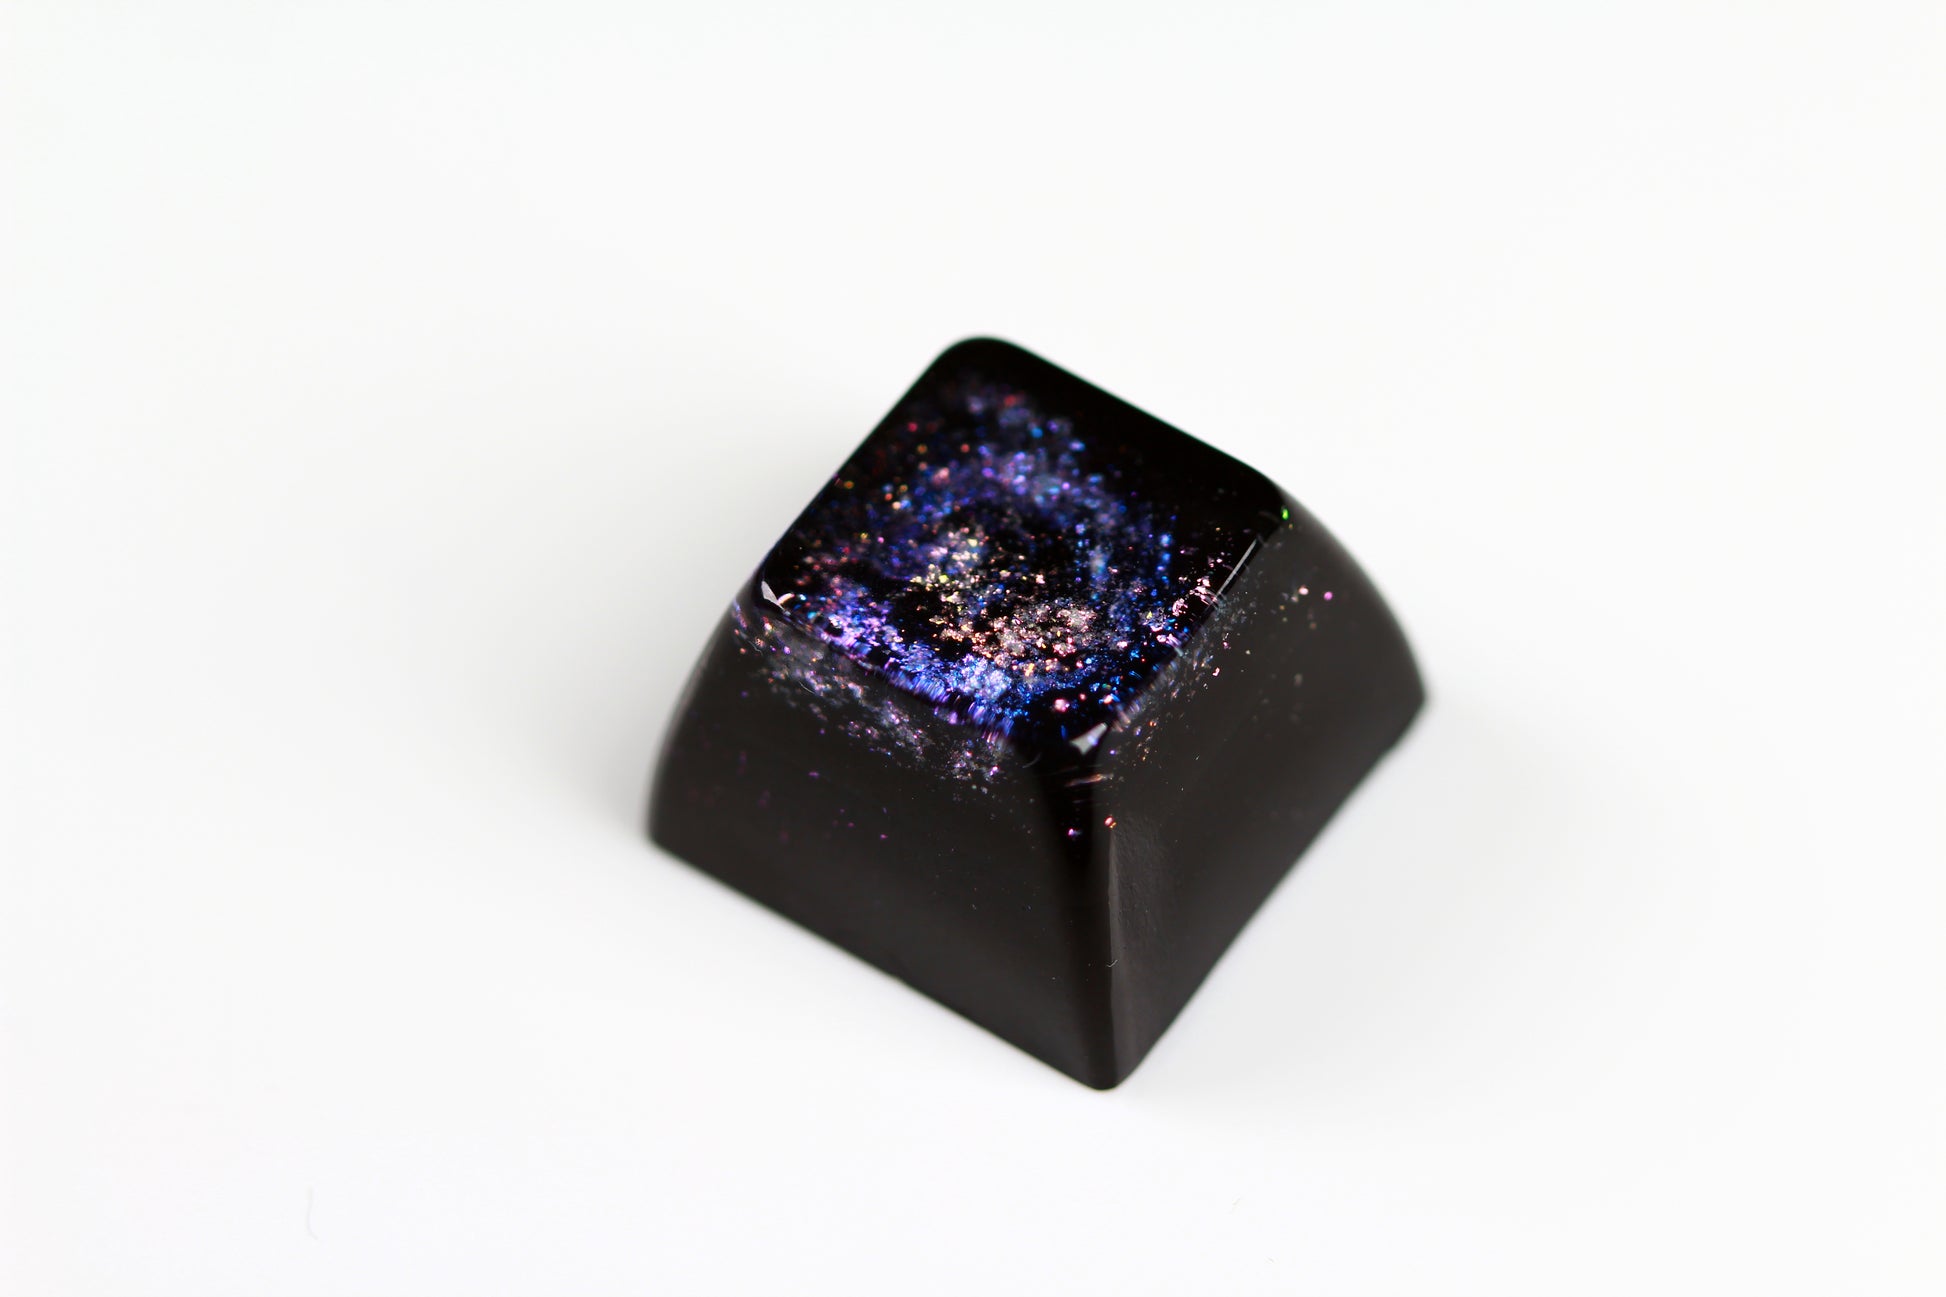 Gimpy SA Row 3 - Deep Field Opal Nebula 1 - PrimeCaps Keycap - Blank and Sculpted Artisan Keycaps for cherry MX mechanical keyboards 